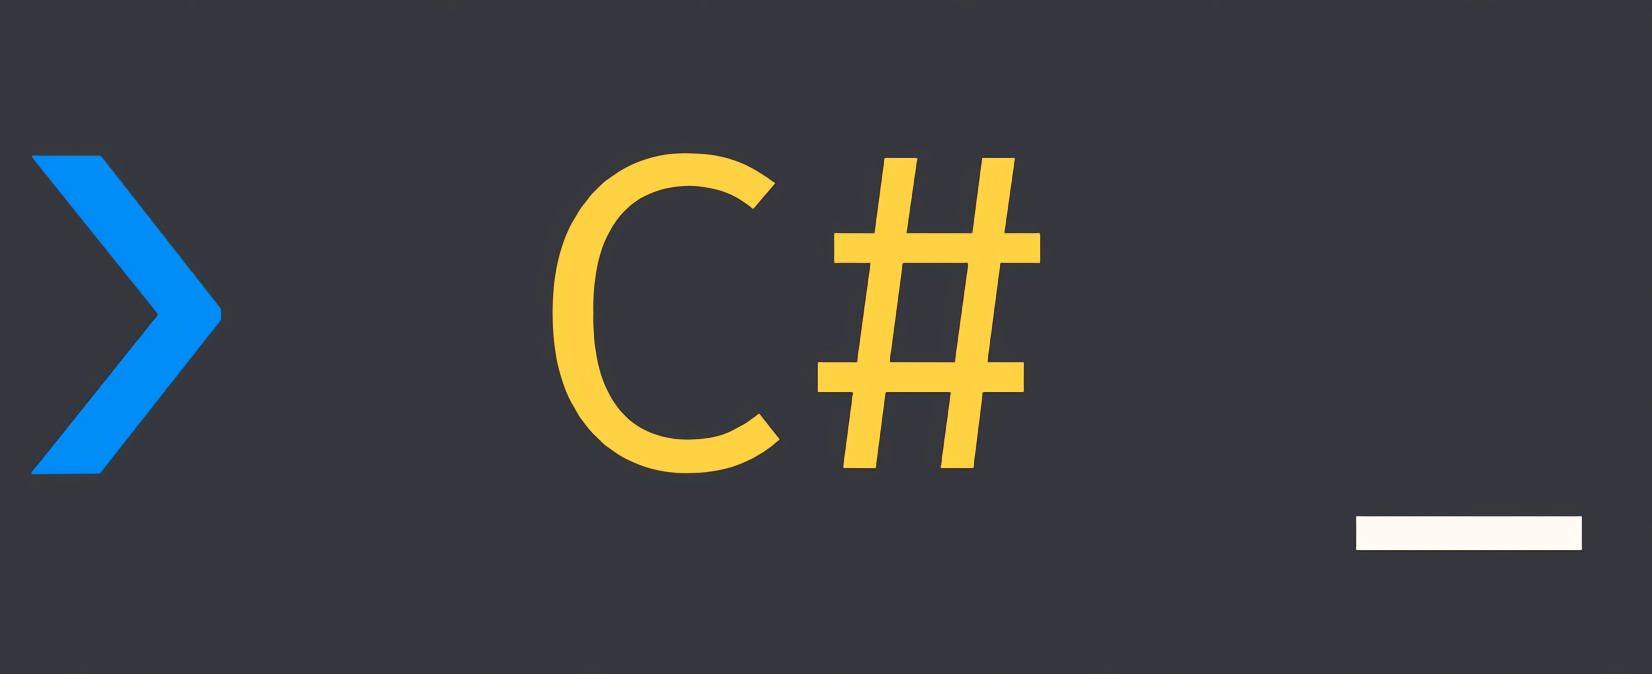 A C# logo